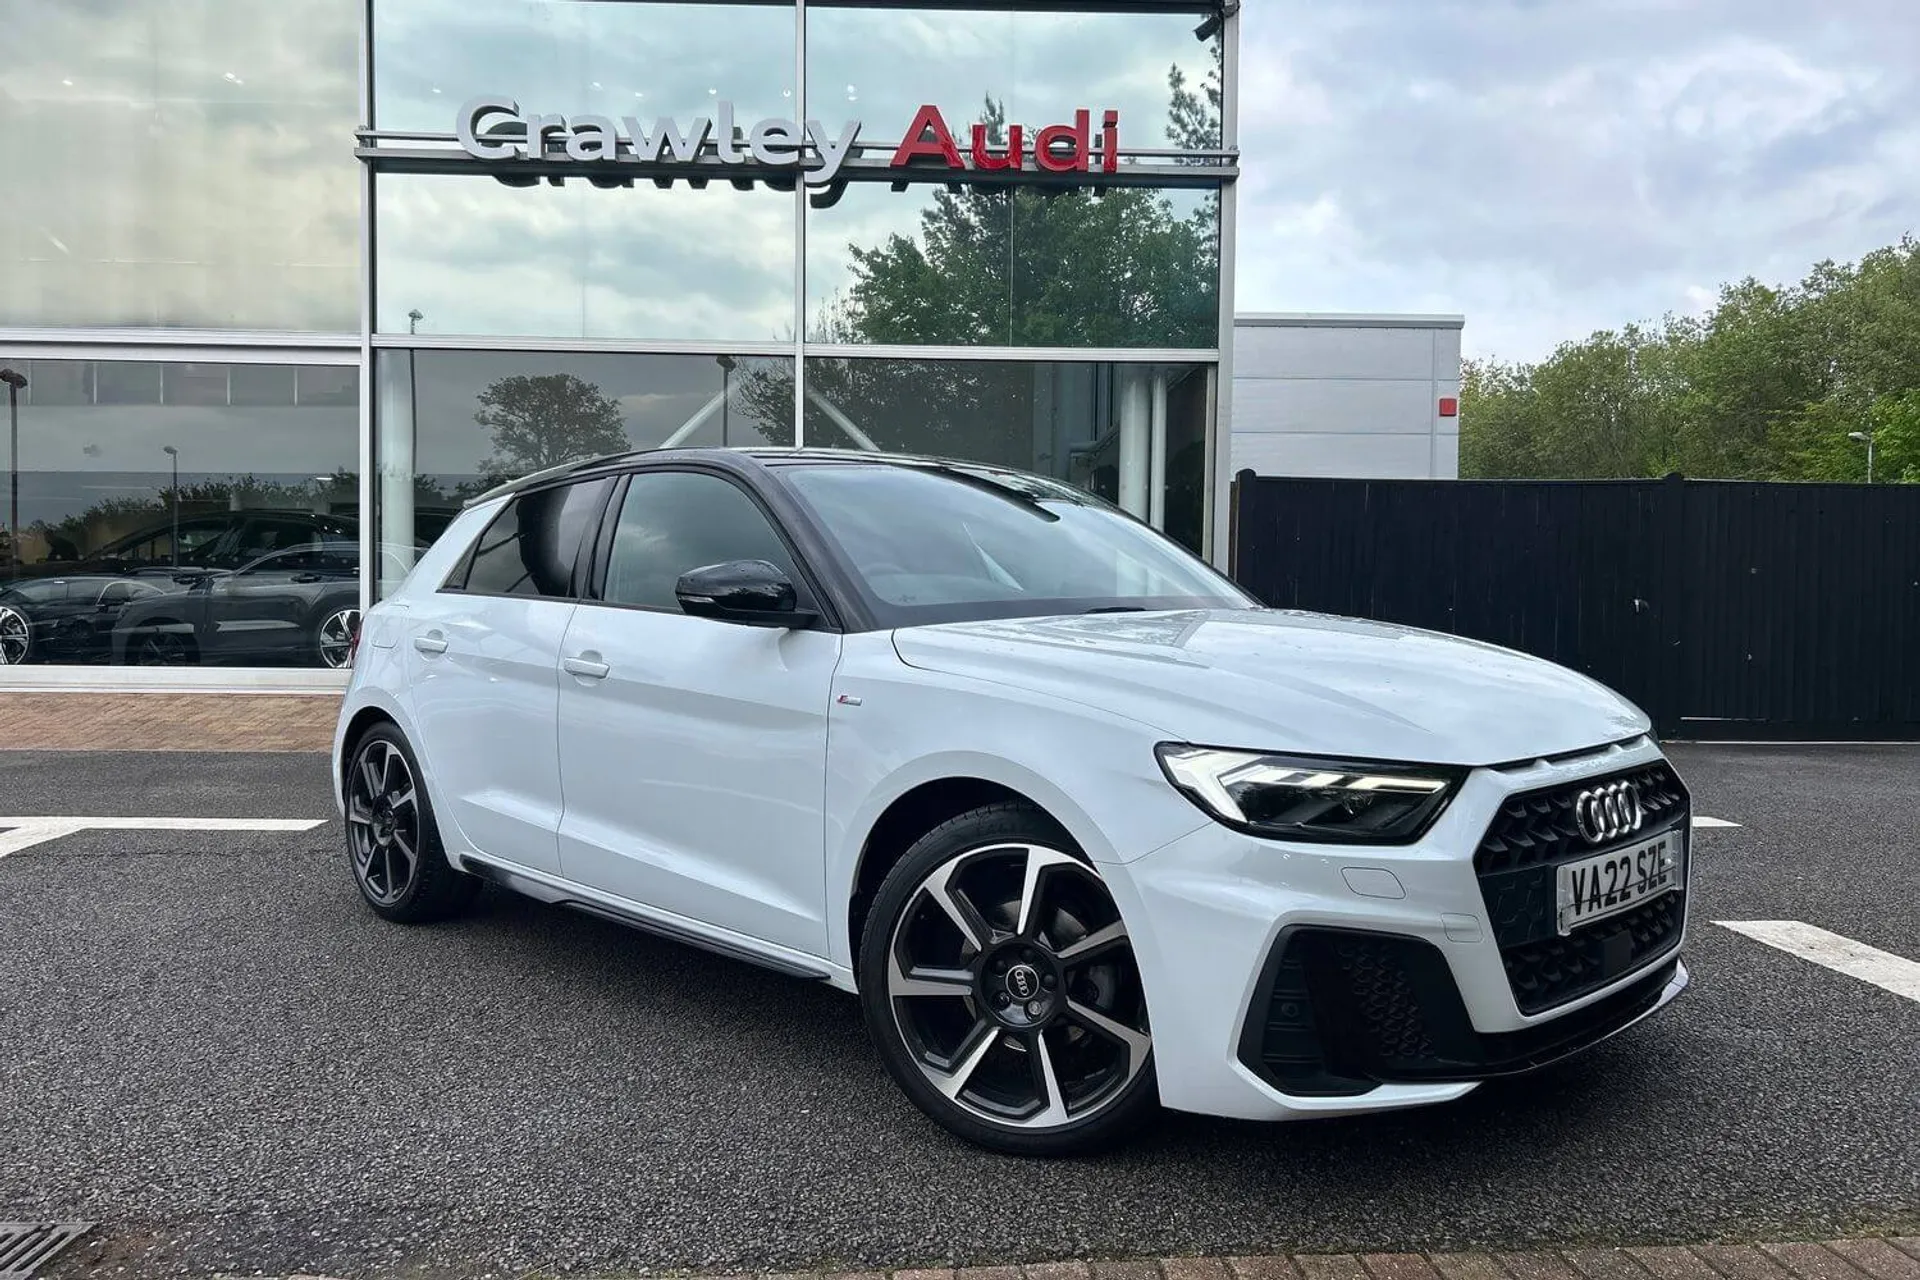 Audi A1 focused image